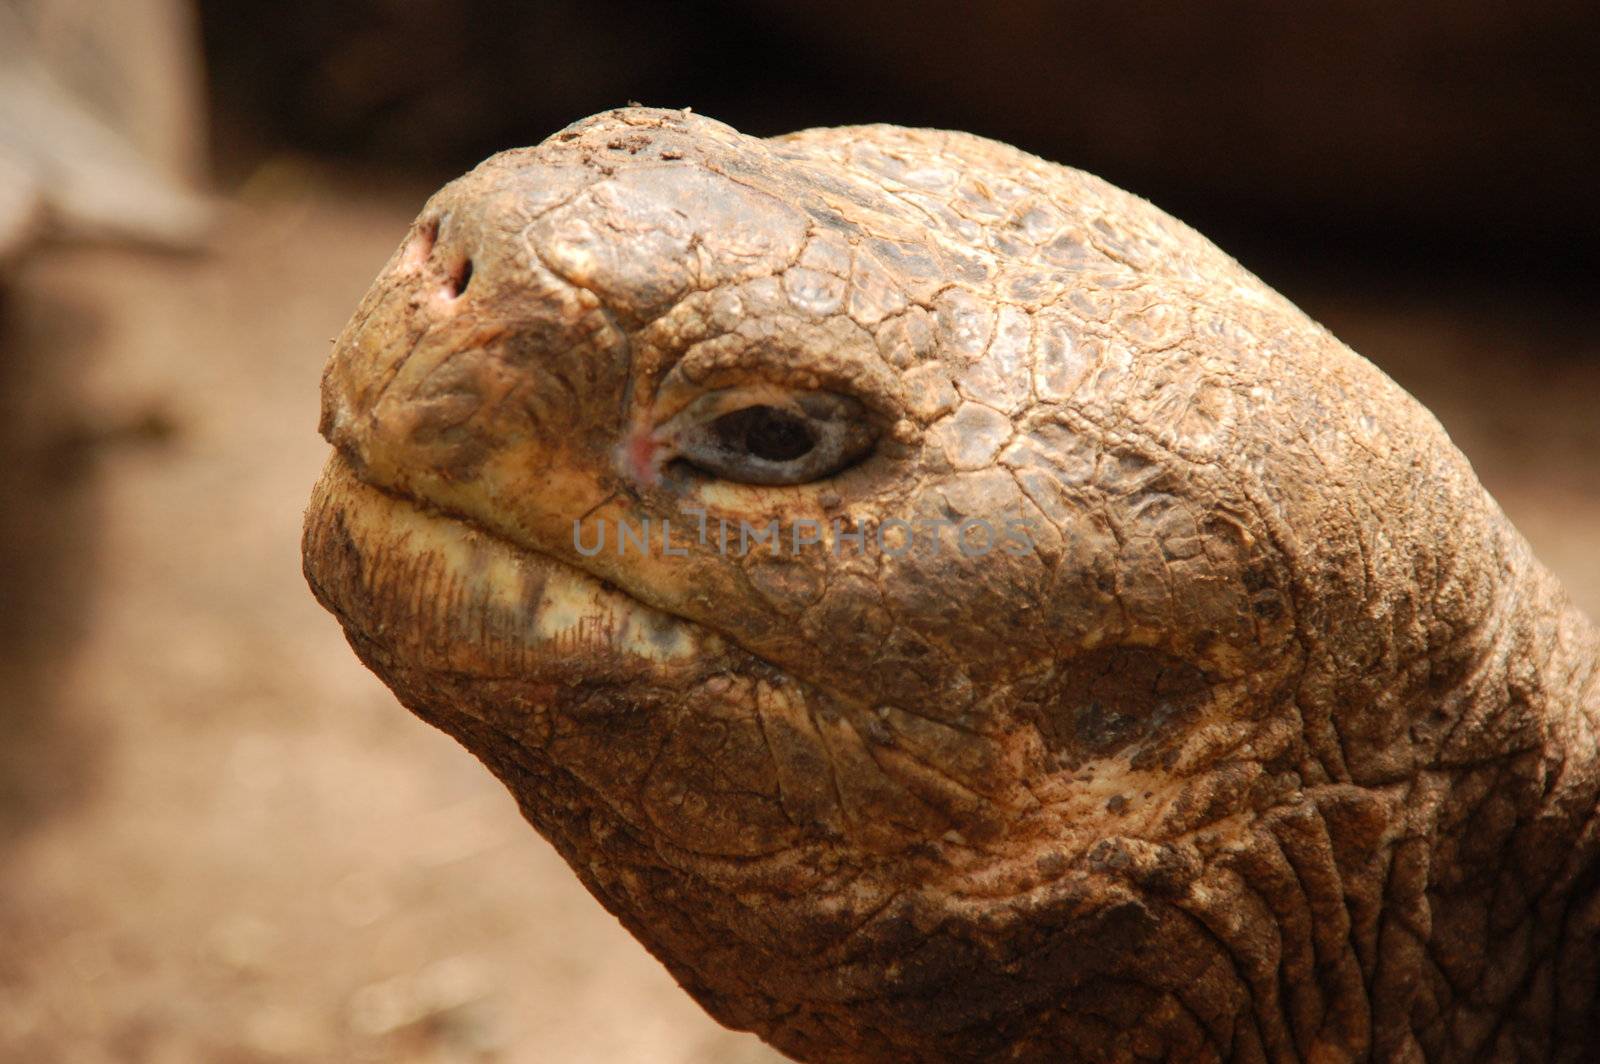 Giant galapagos turtoise, close up